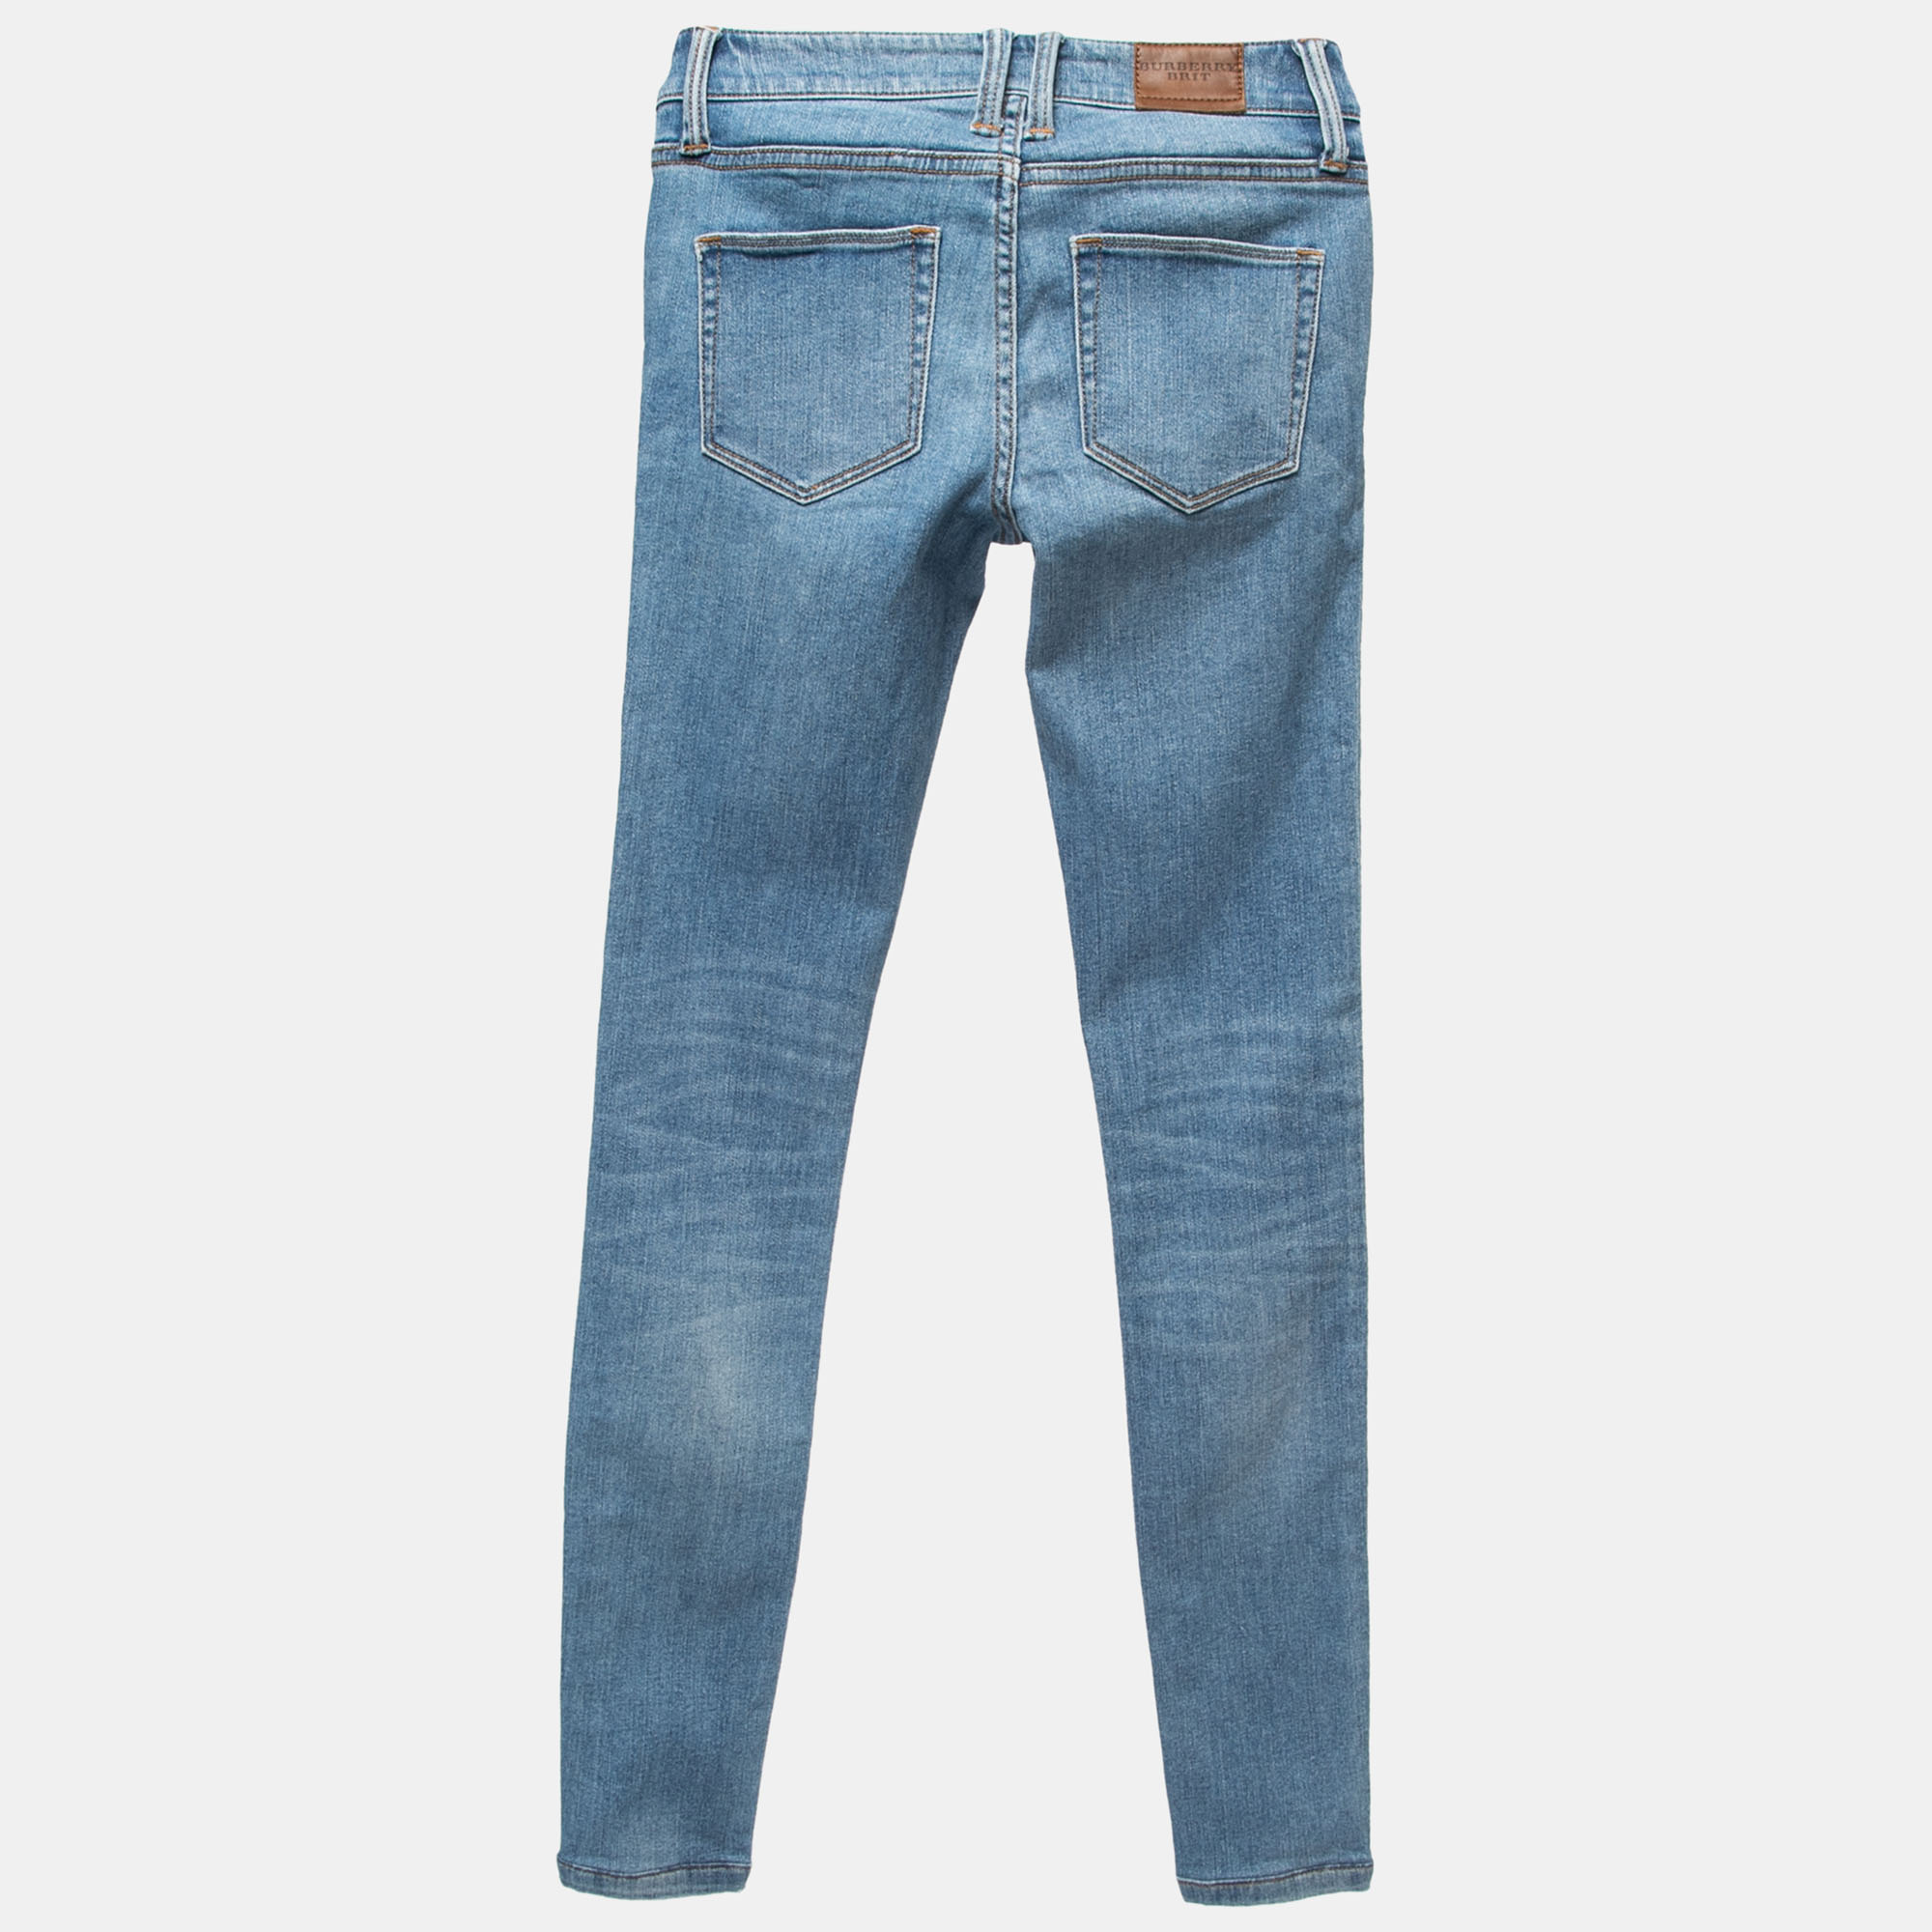 

Burberry Brit Blue Denim Low Rise Skinny Jeans  Waist 24